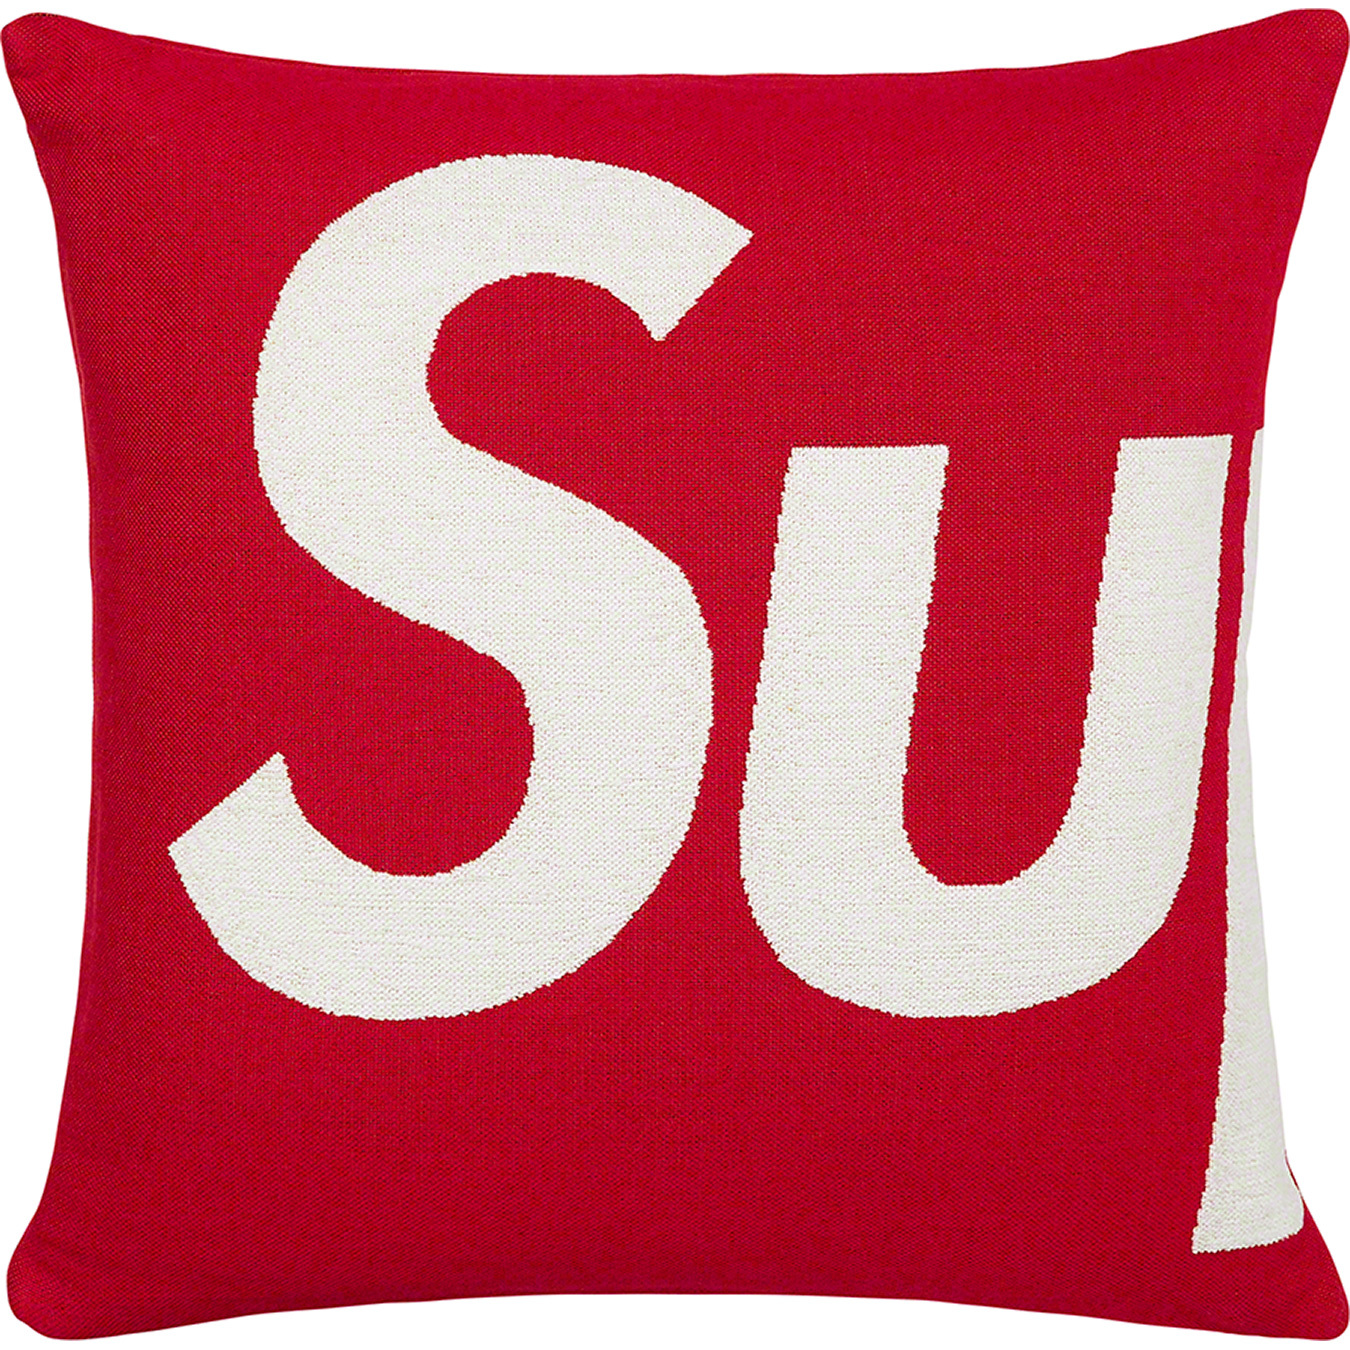 Supreme Home Collective Printed Pillows Cover